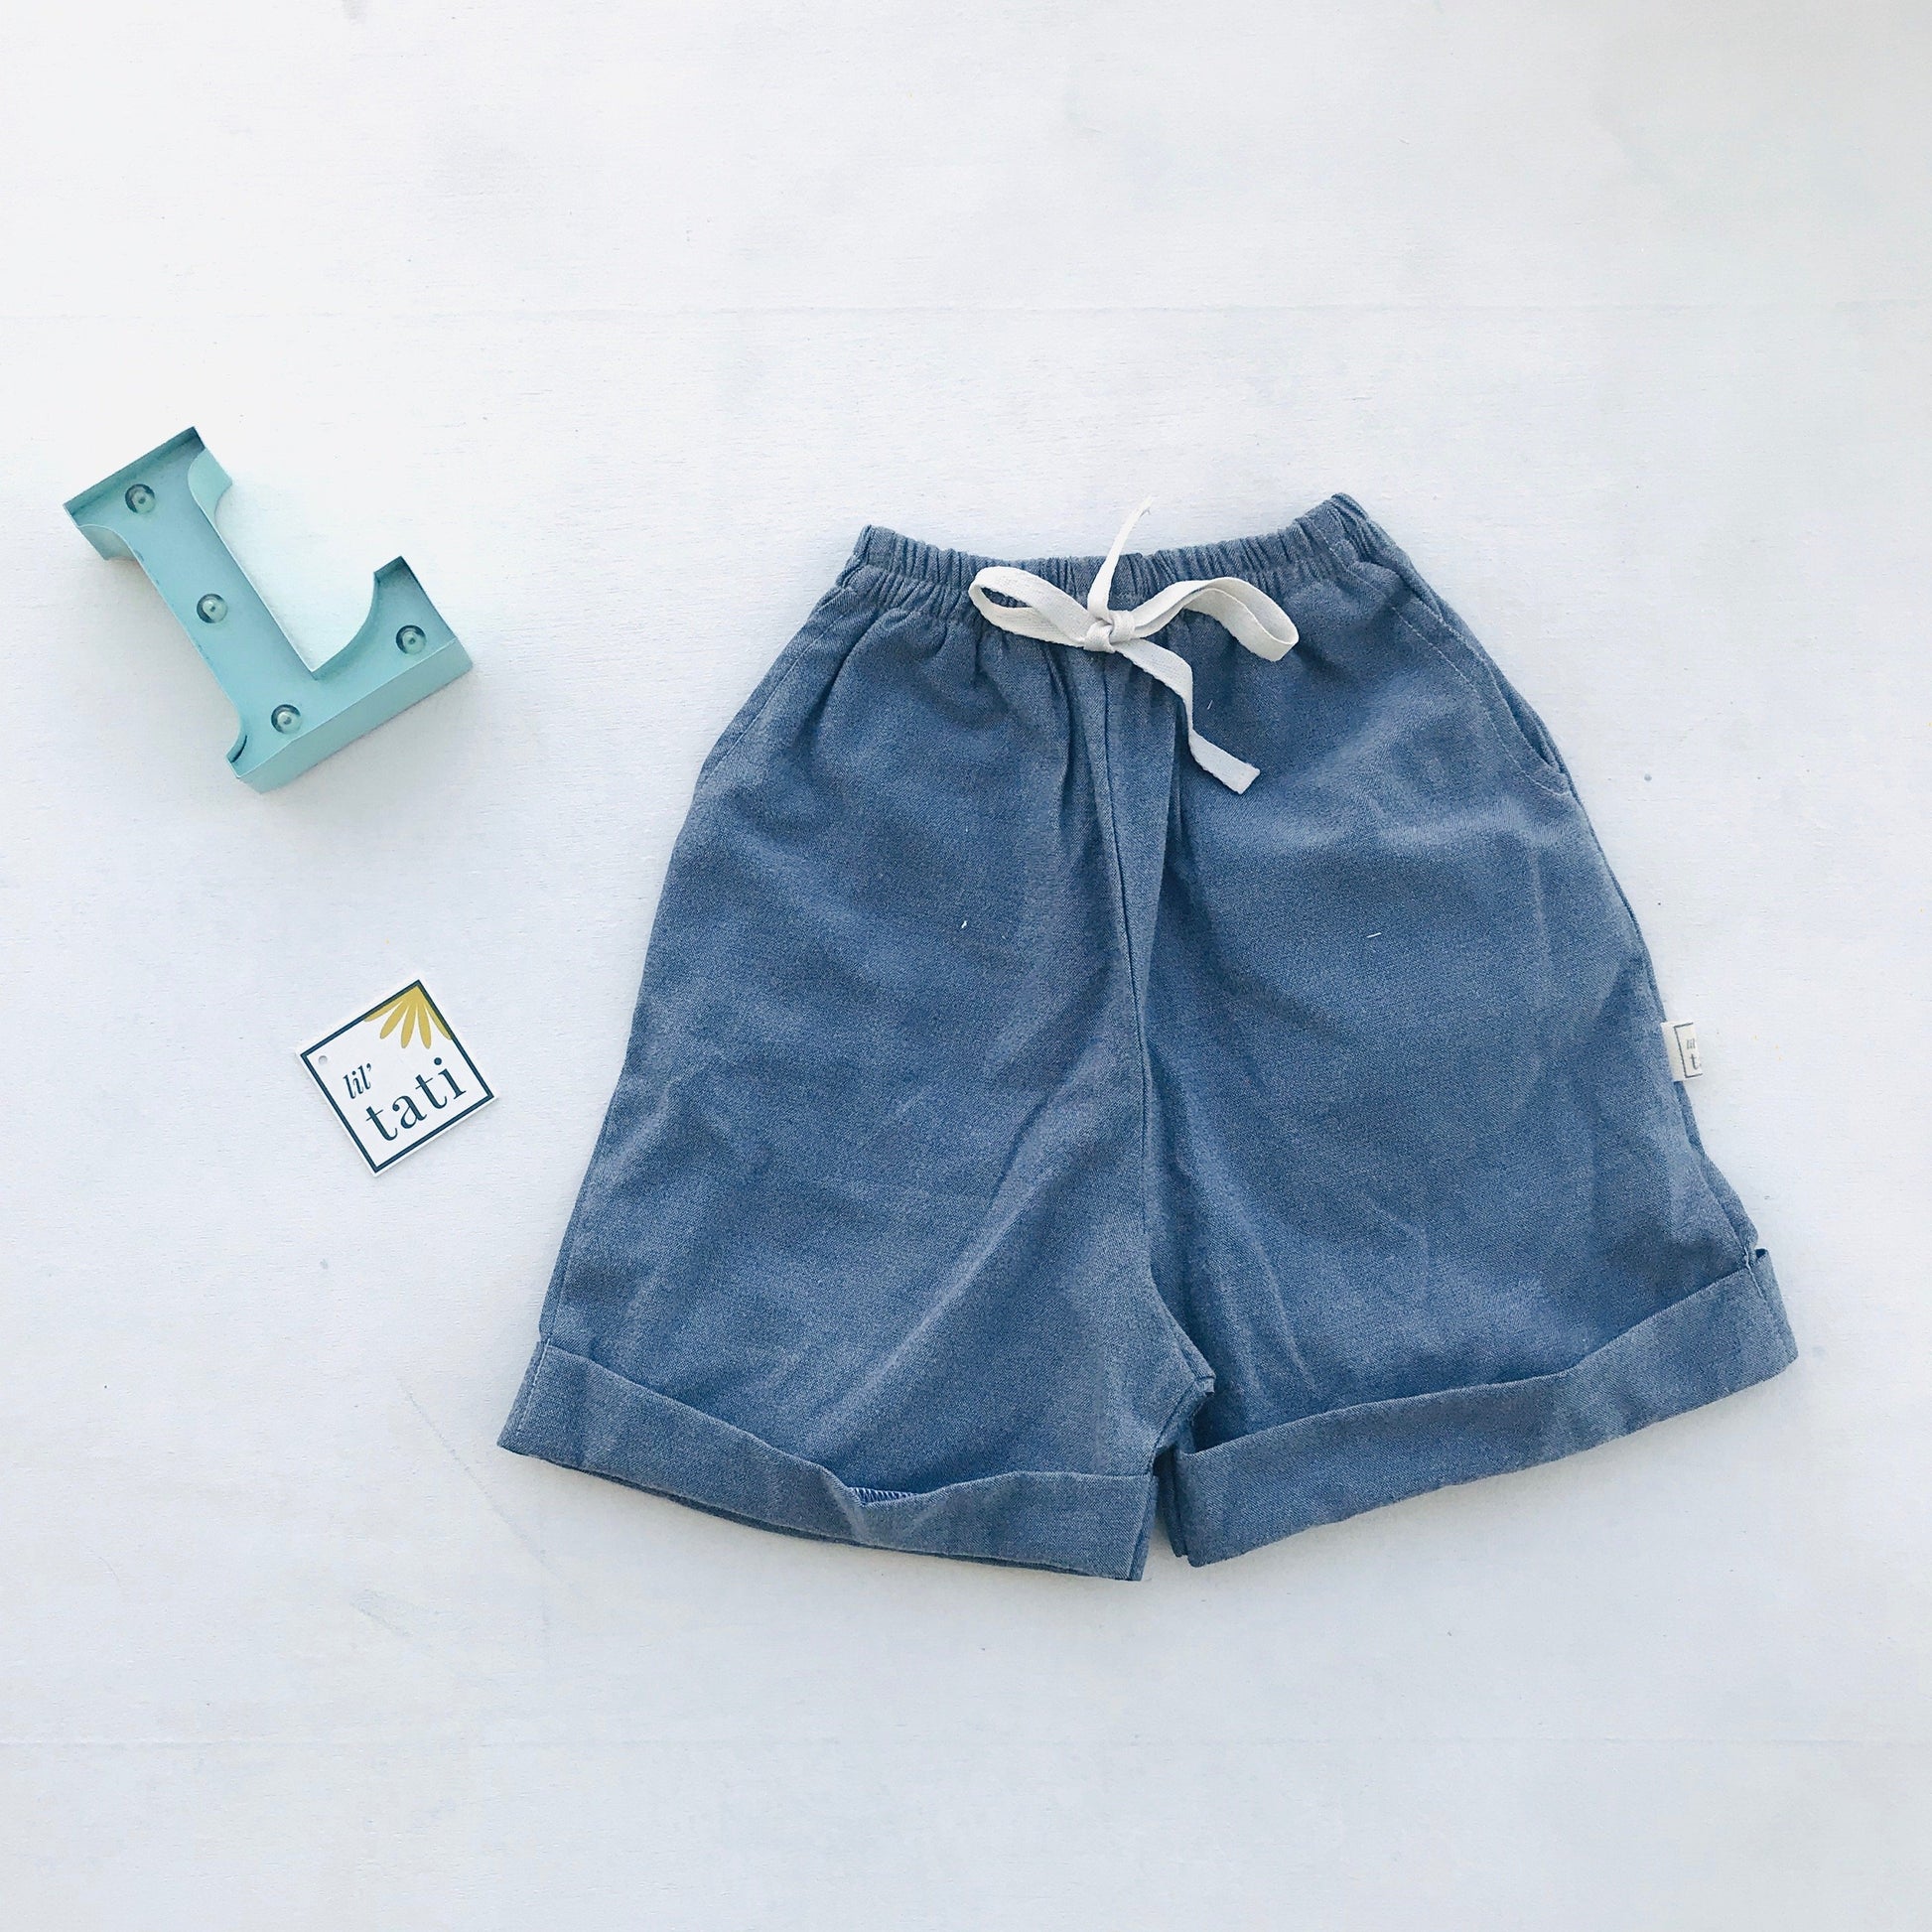 Sundrop Shorts in Blue Linen - Lil' Tati